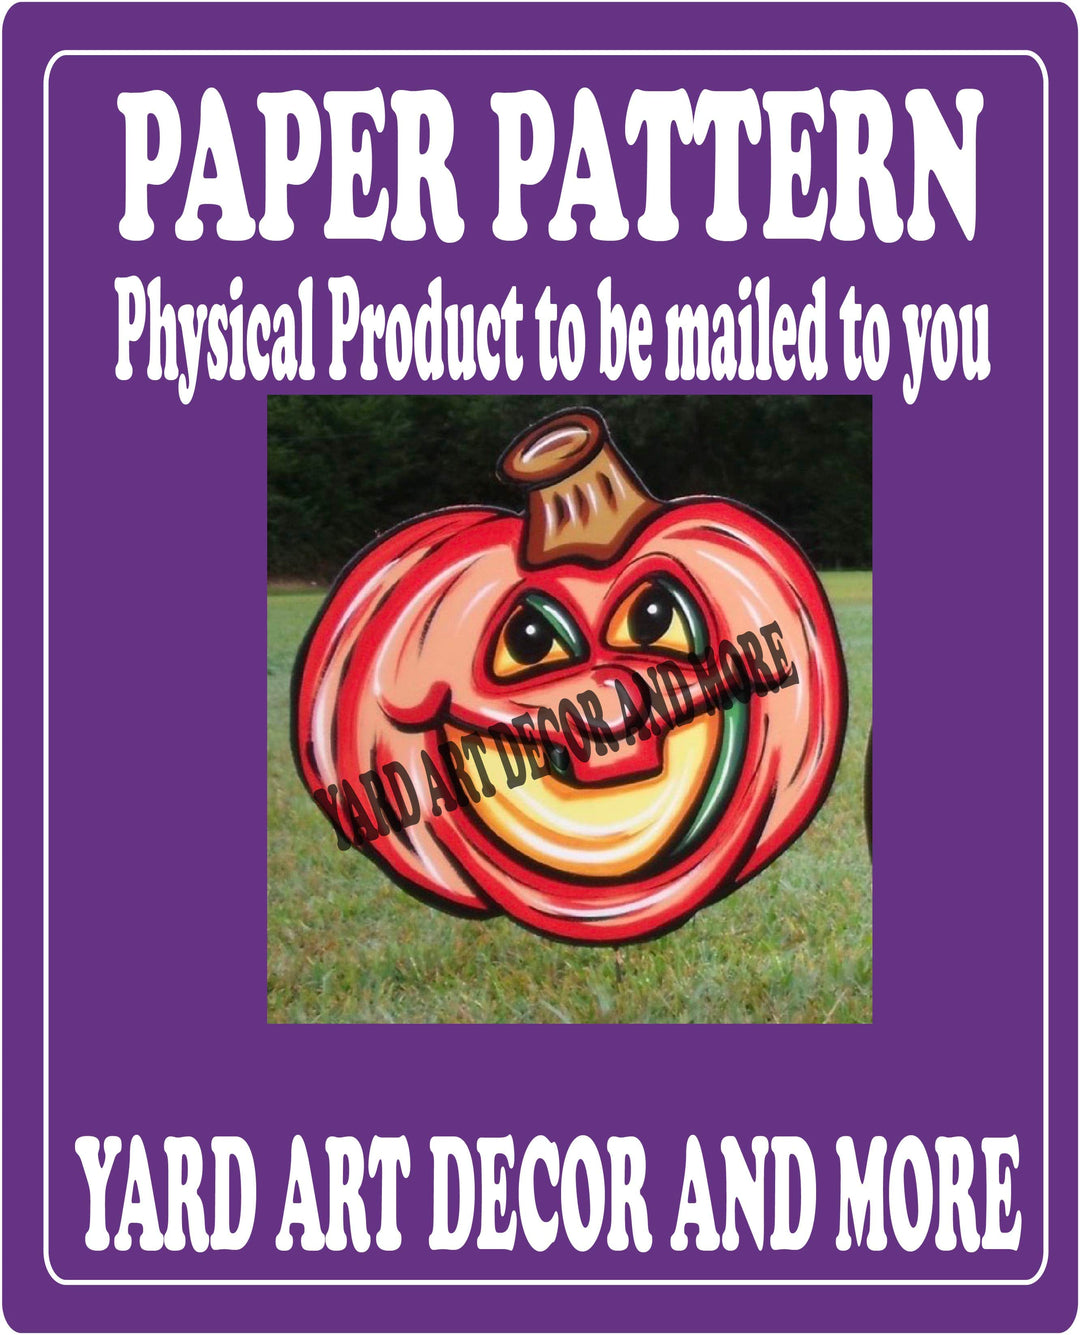 Fall Pumpkin with face yard art sign paper pattern